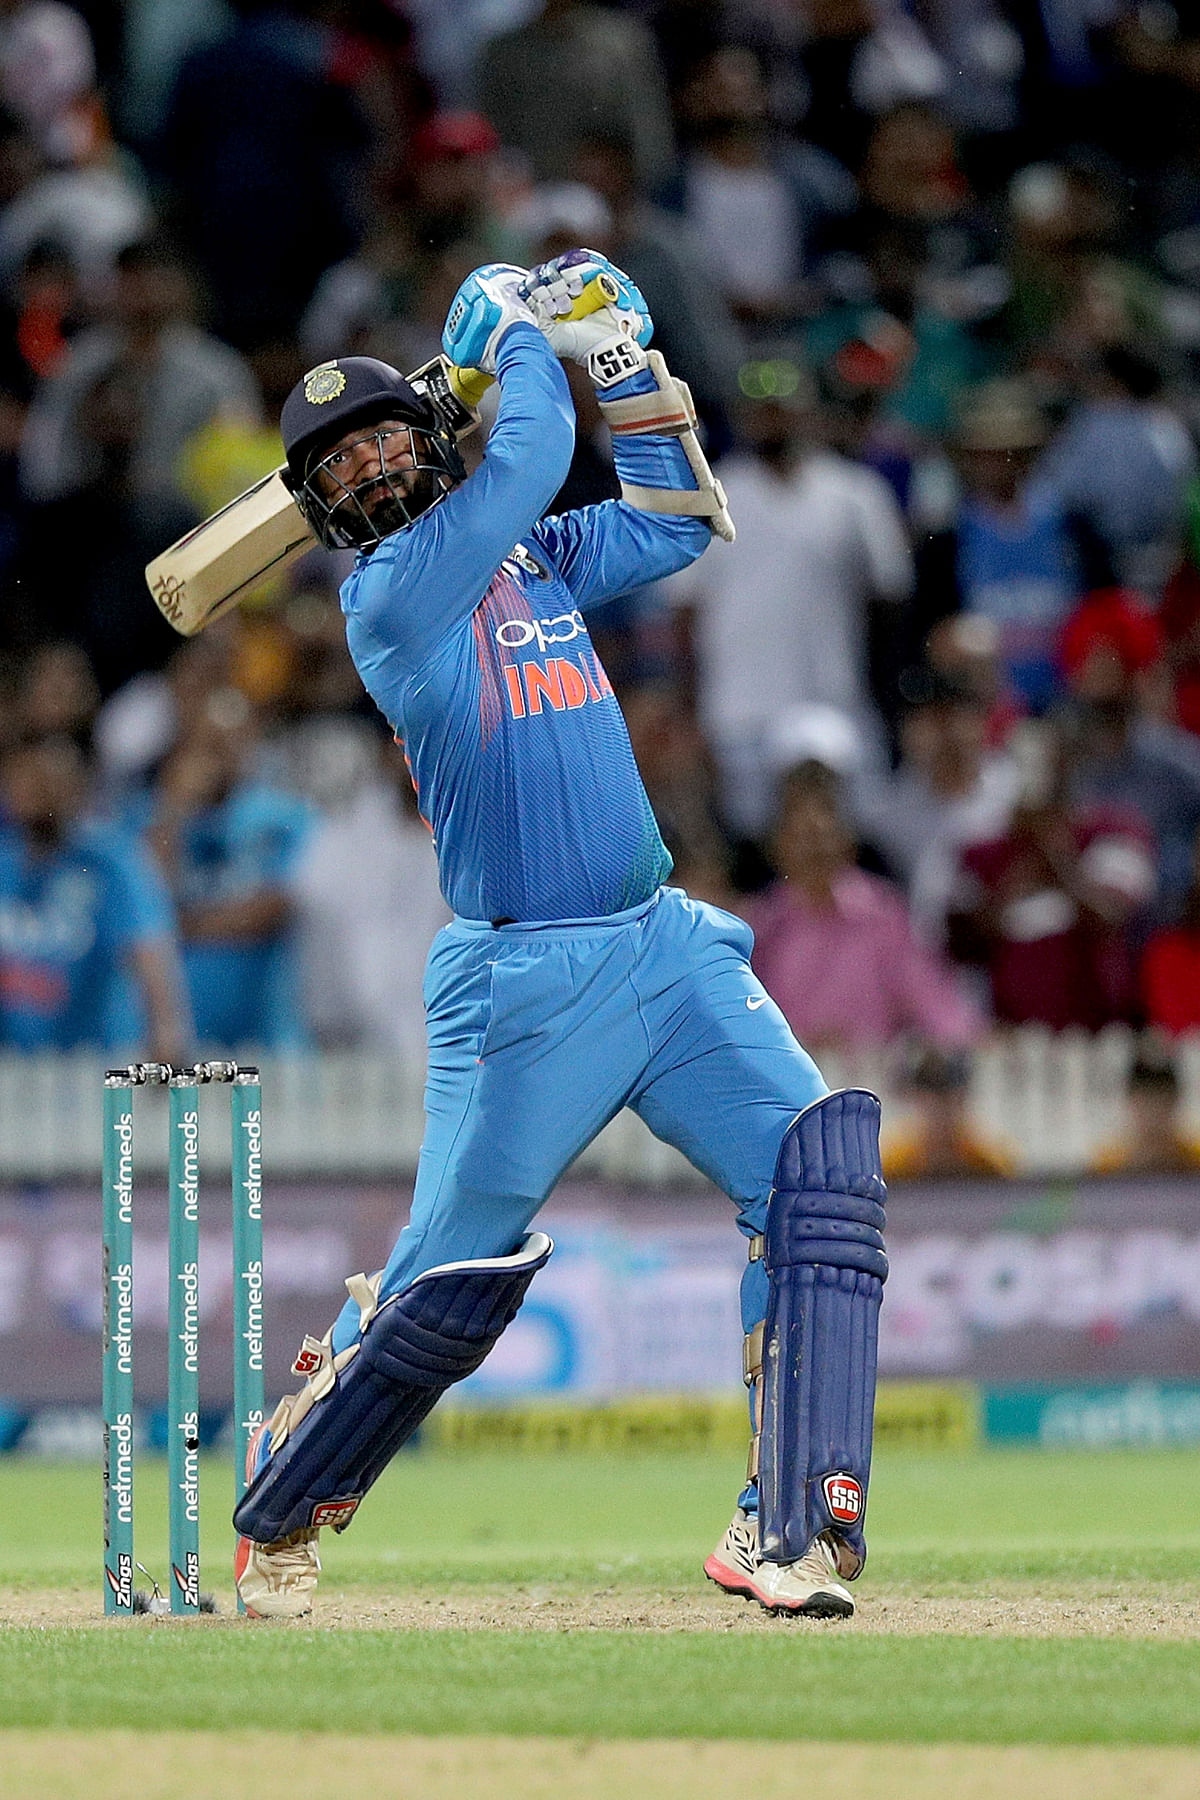 Karthik refused a single to Krunal Pandya with India needing 14 off four balls in the deciding T20I vs New Zealand.